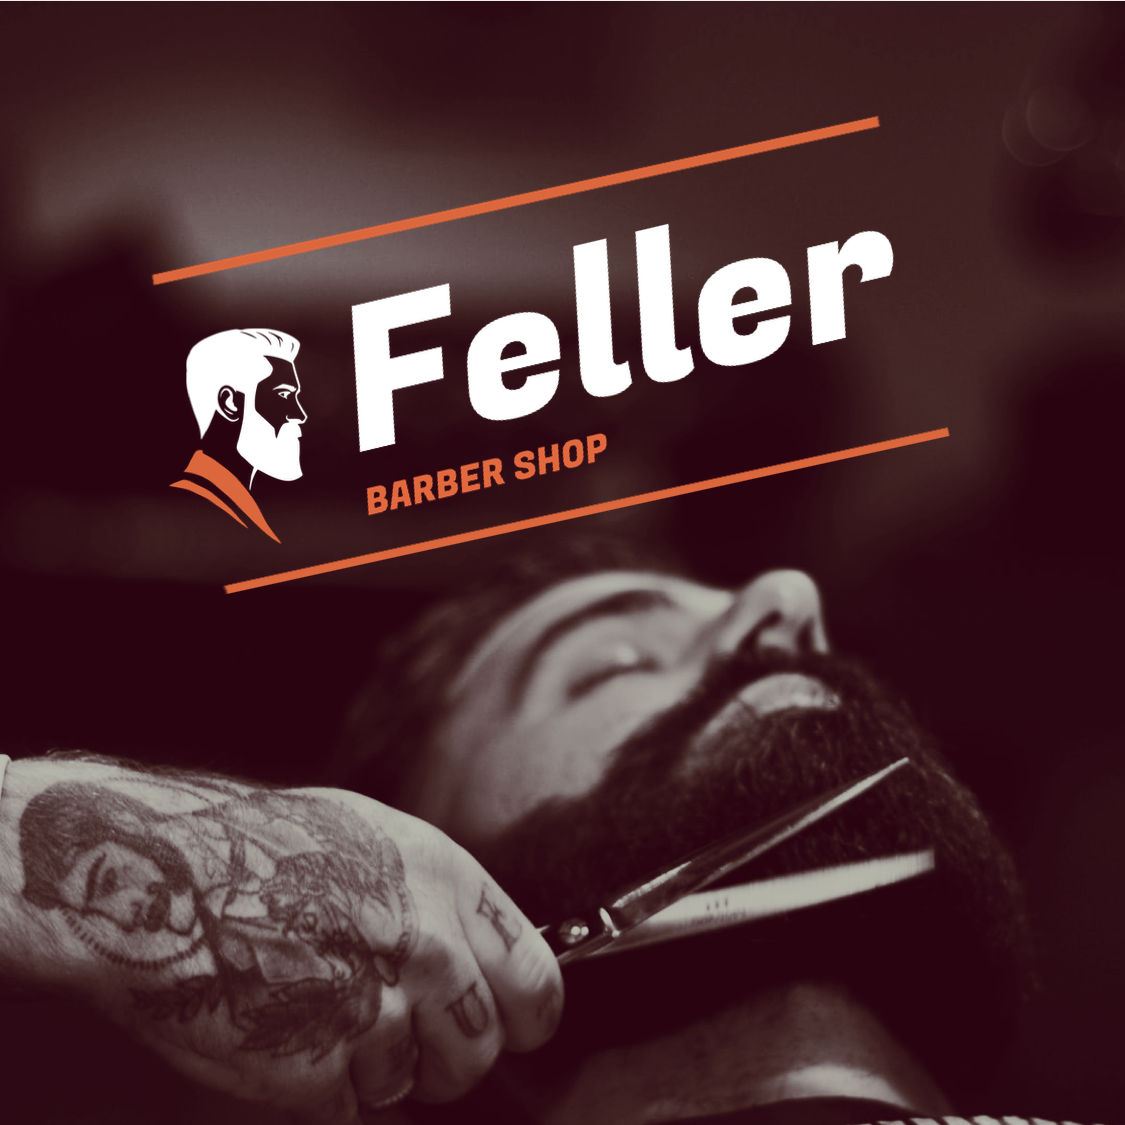 Men's barber shop business logo template